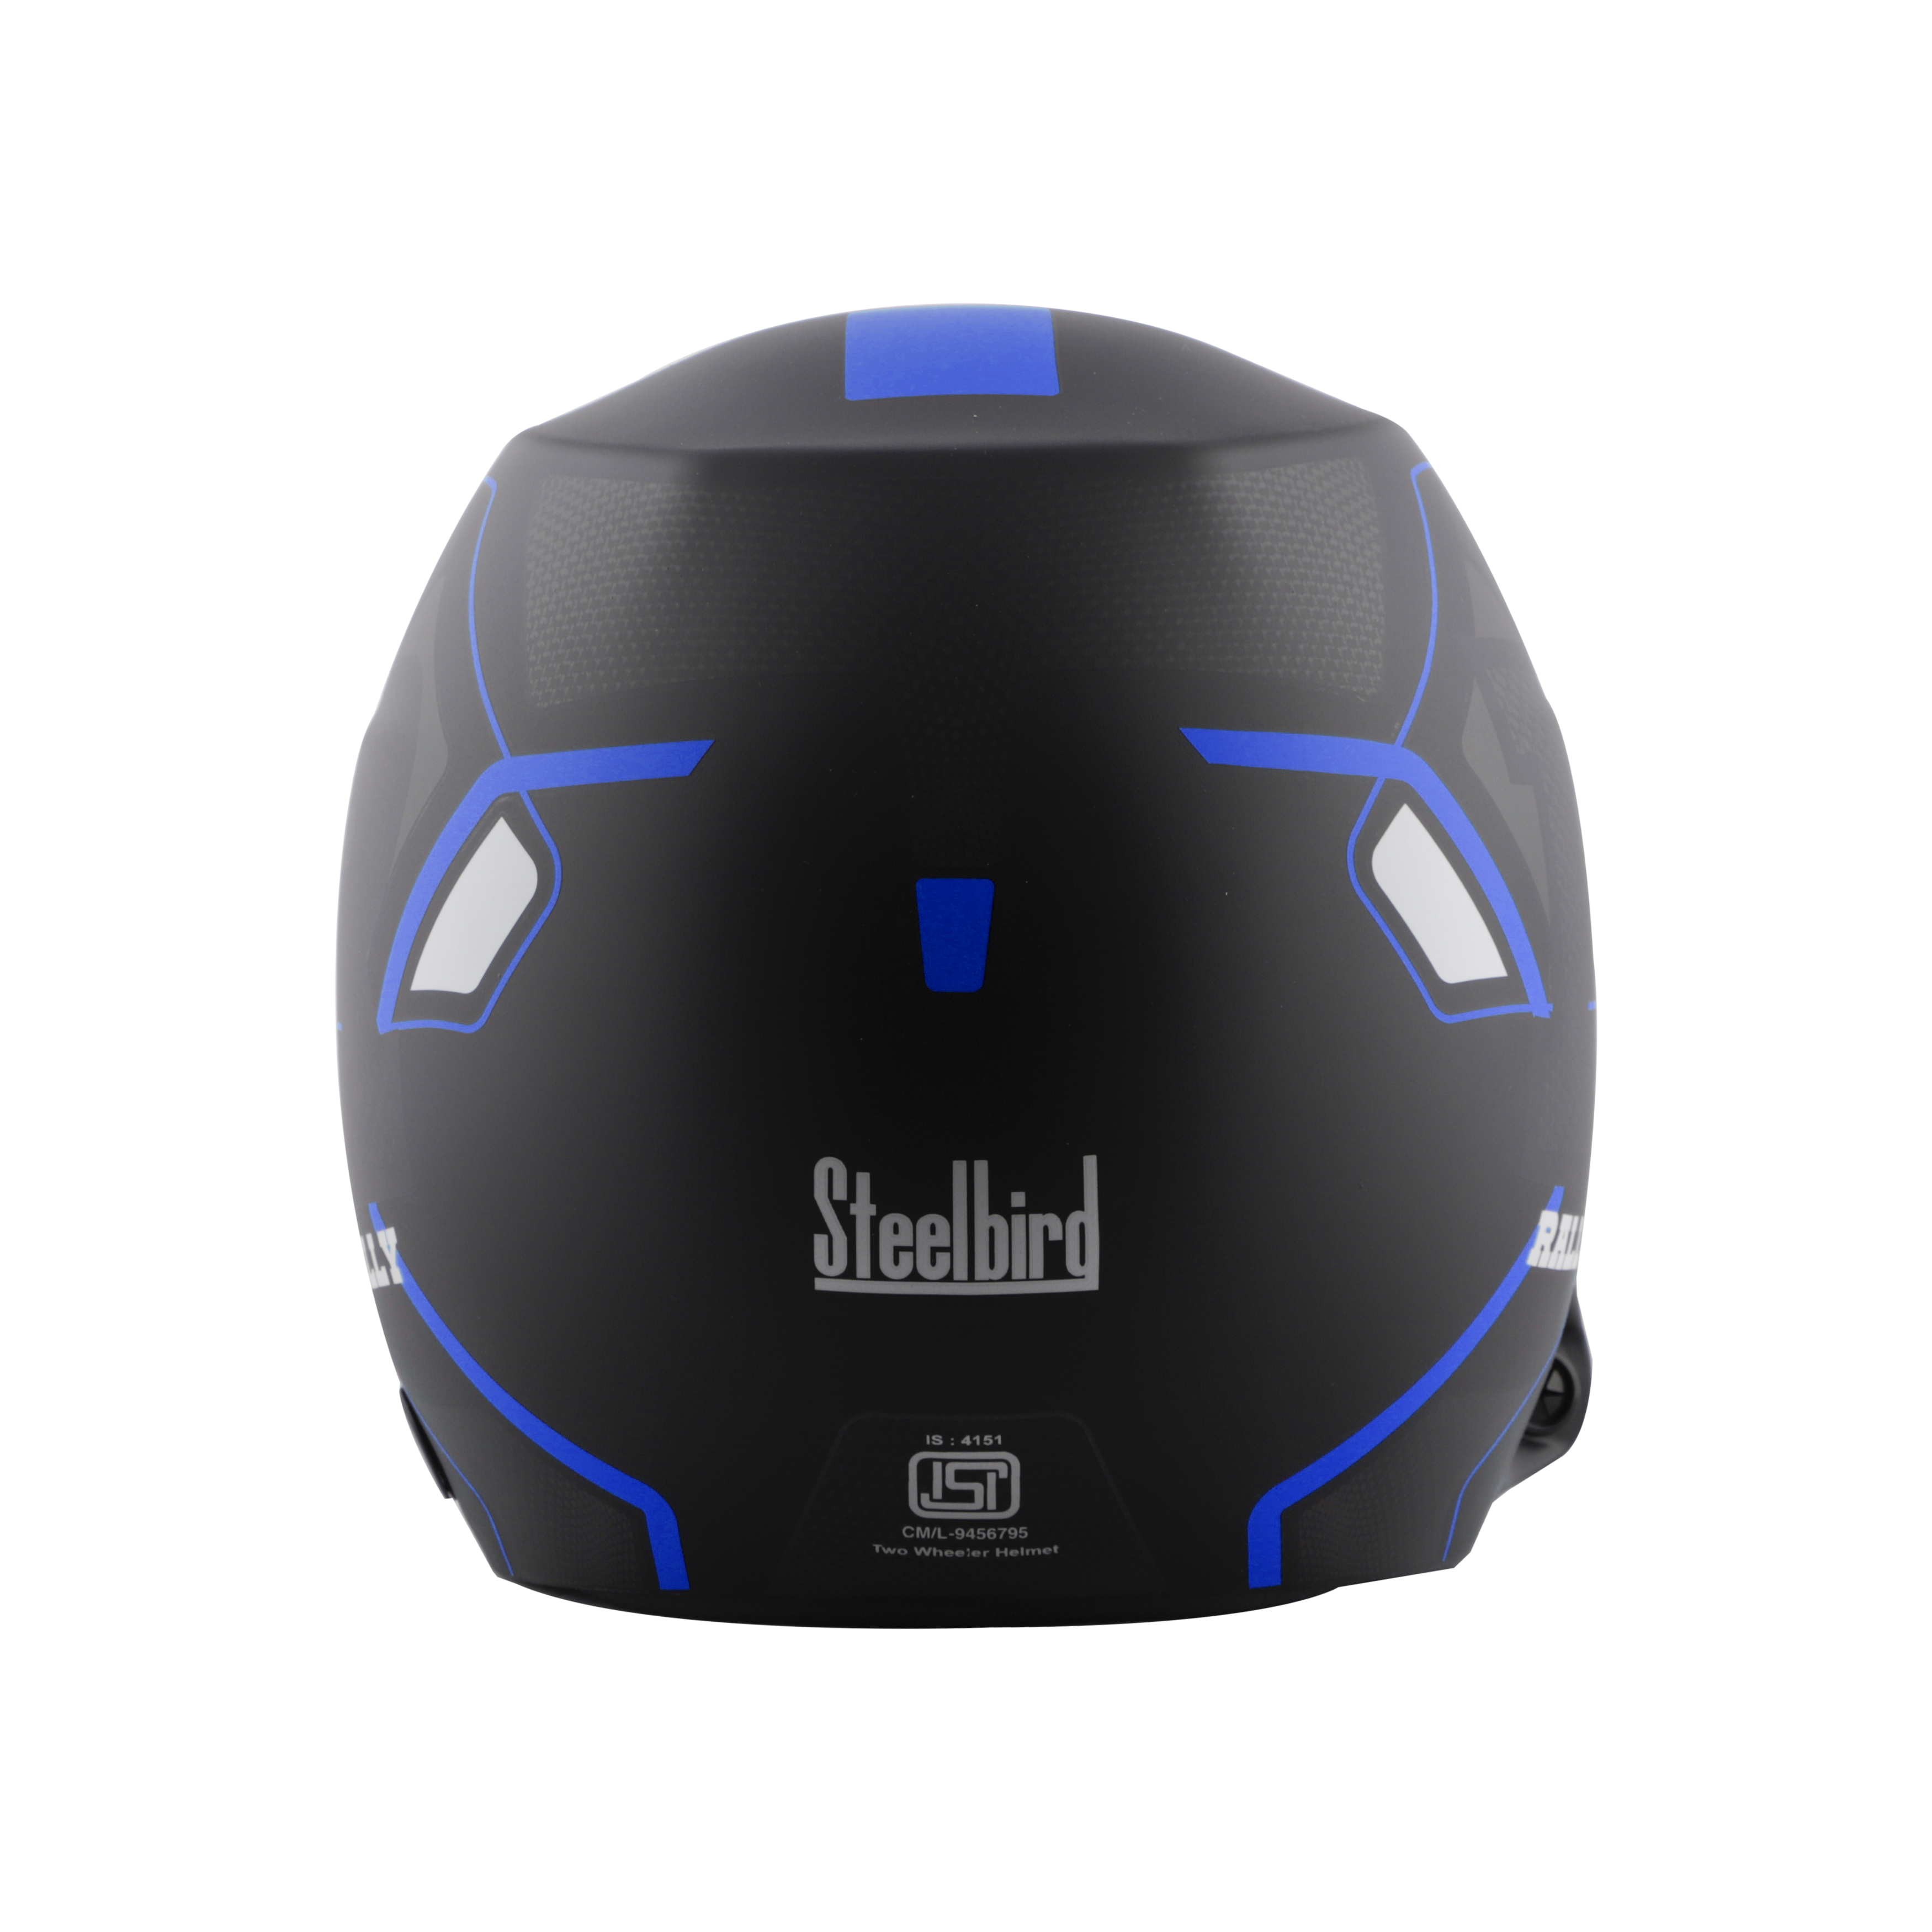 Steelbird 7Wings Rally Beat Open Face ISI Certified Off Road Helmet (Matt Black Blue With Chrome Silver Visor)